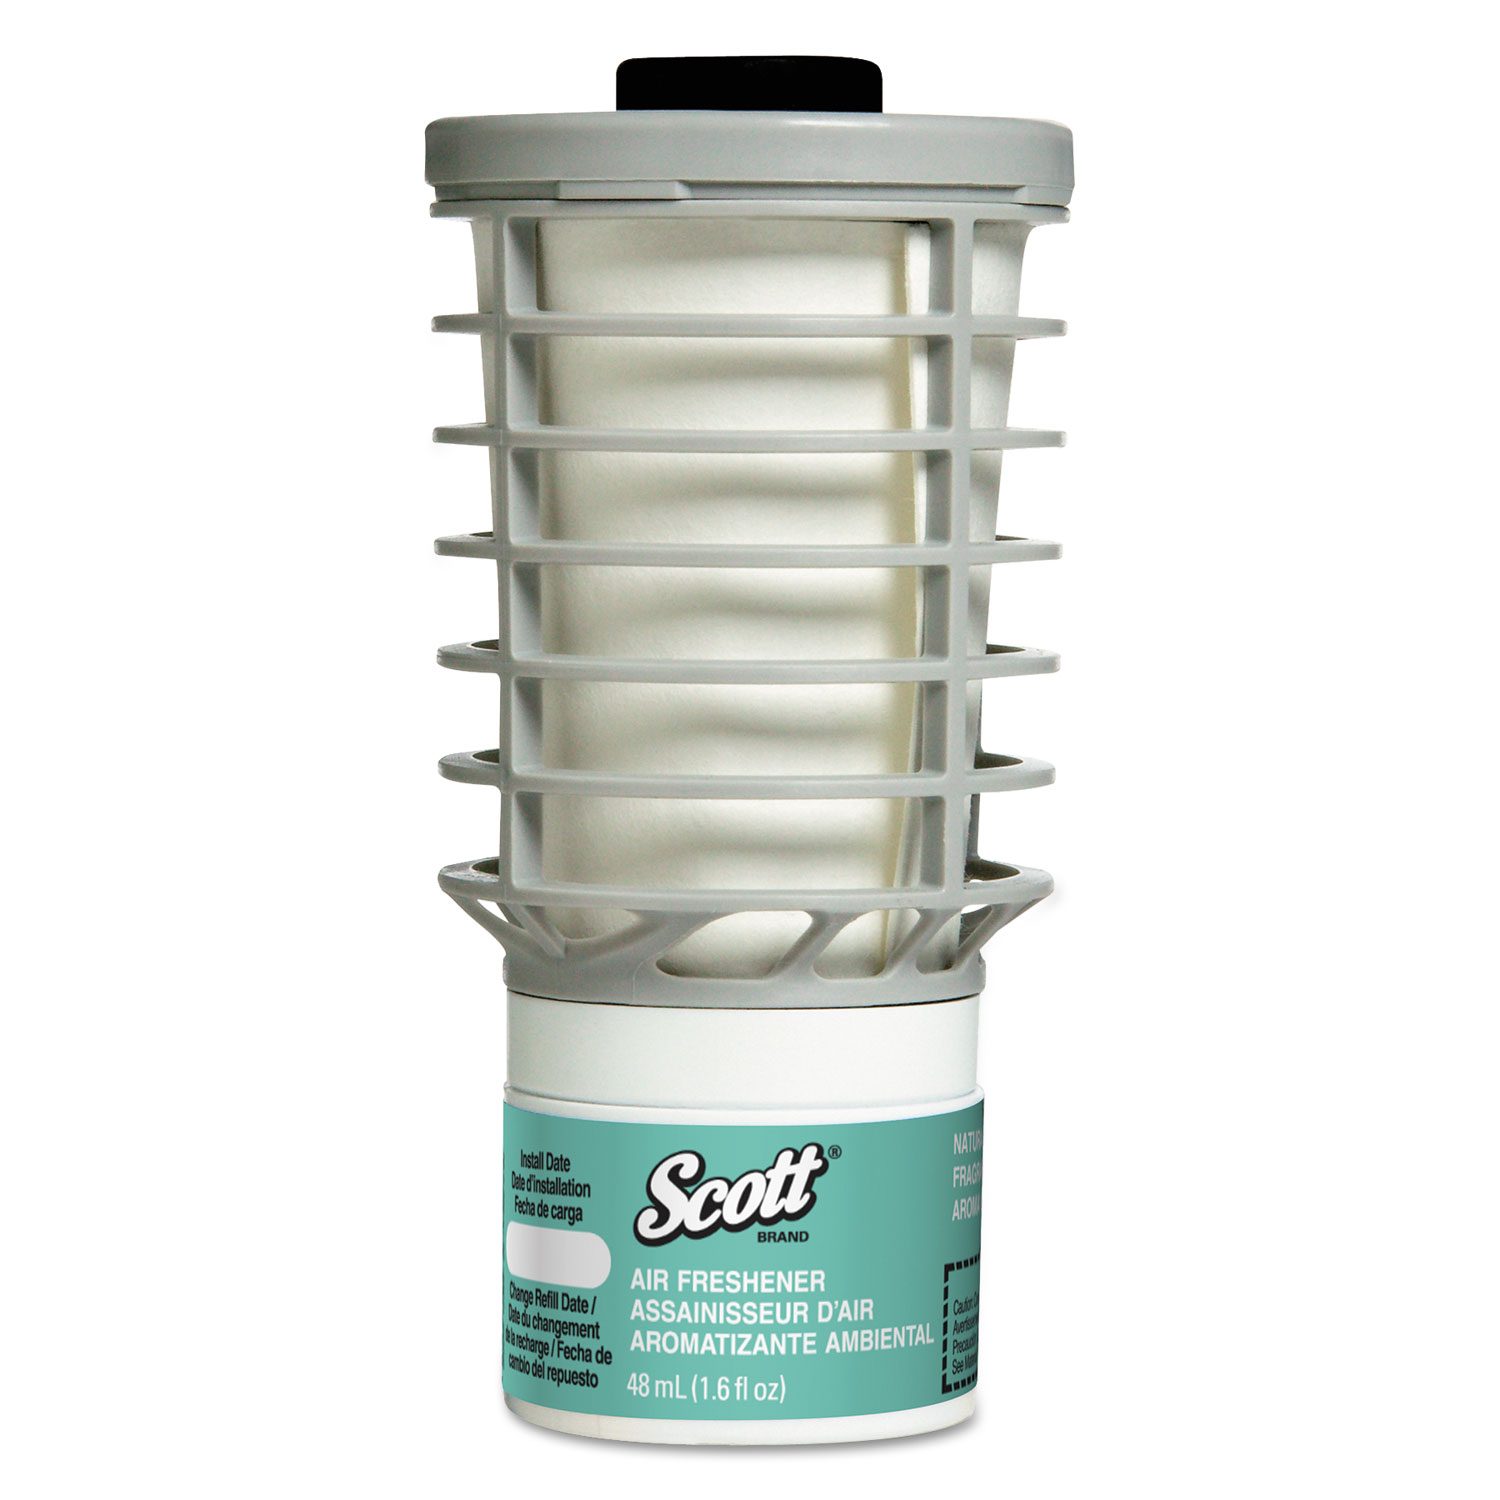  Scott 12369 Essential Continuous Air Freshener Refill, Natural, 1.6 oz, 6/Carton (KCC12369) 